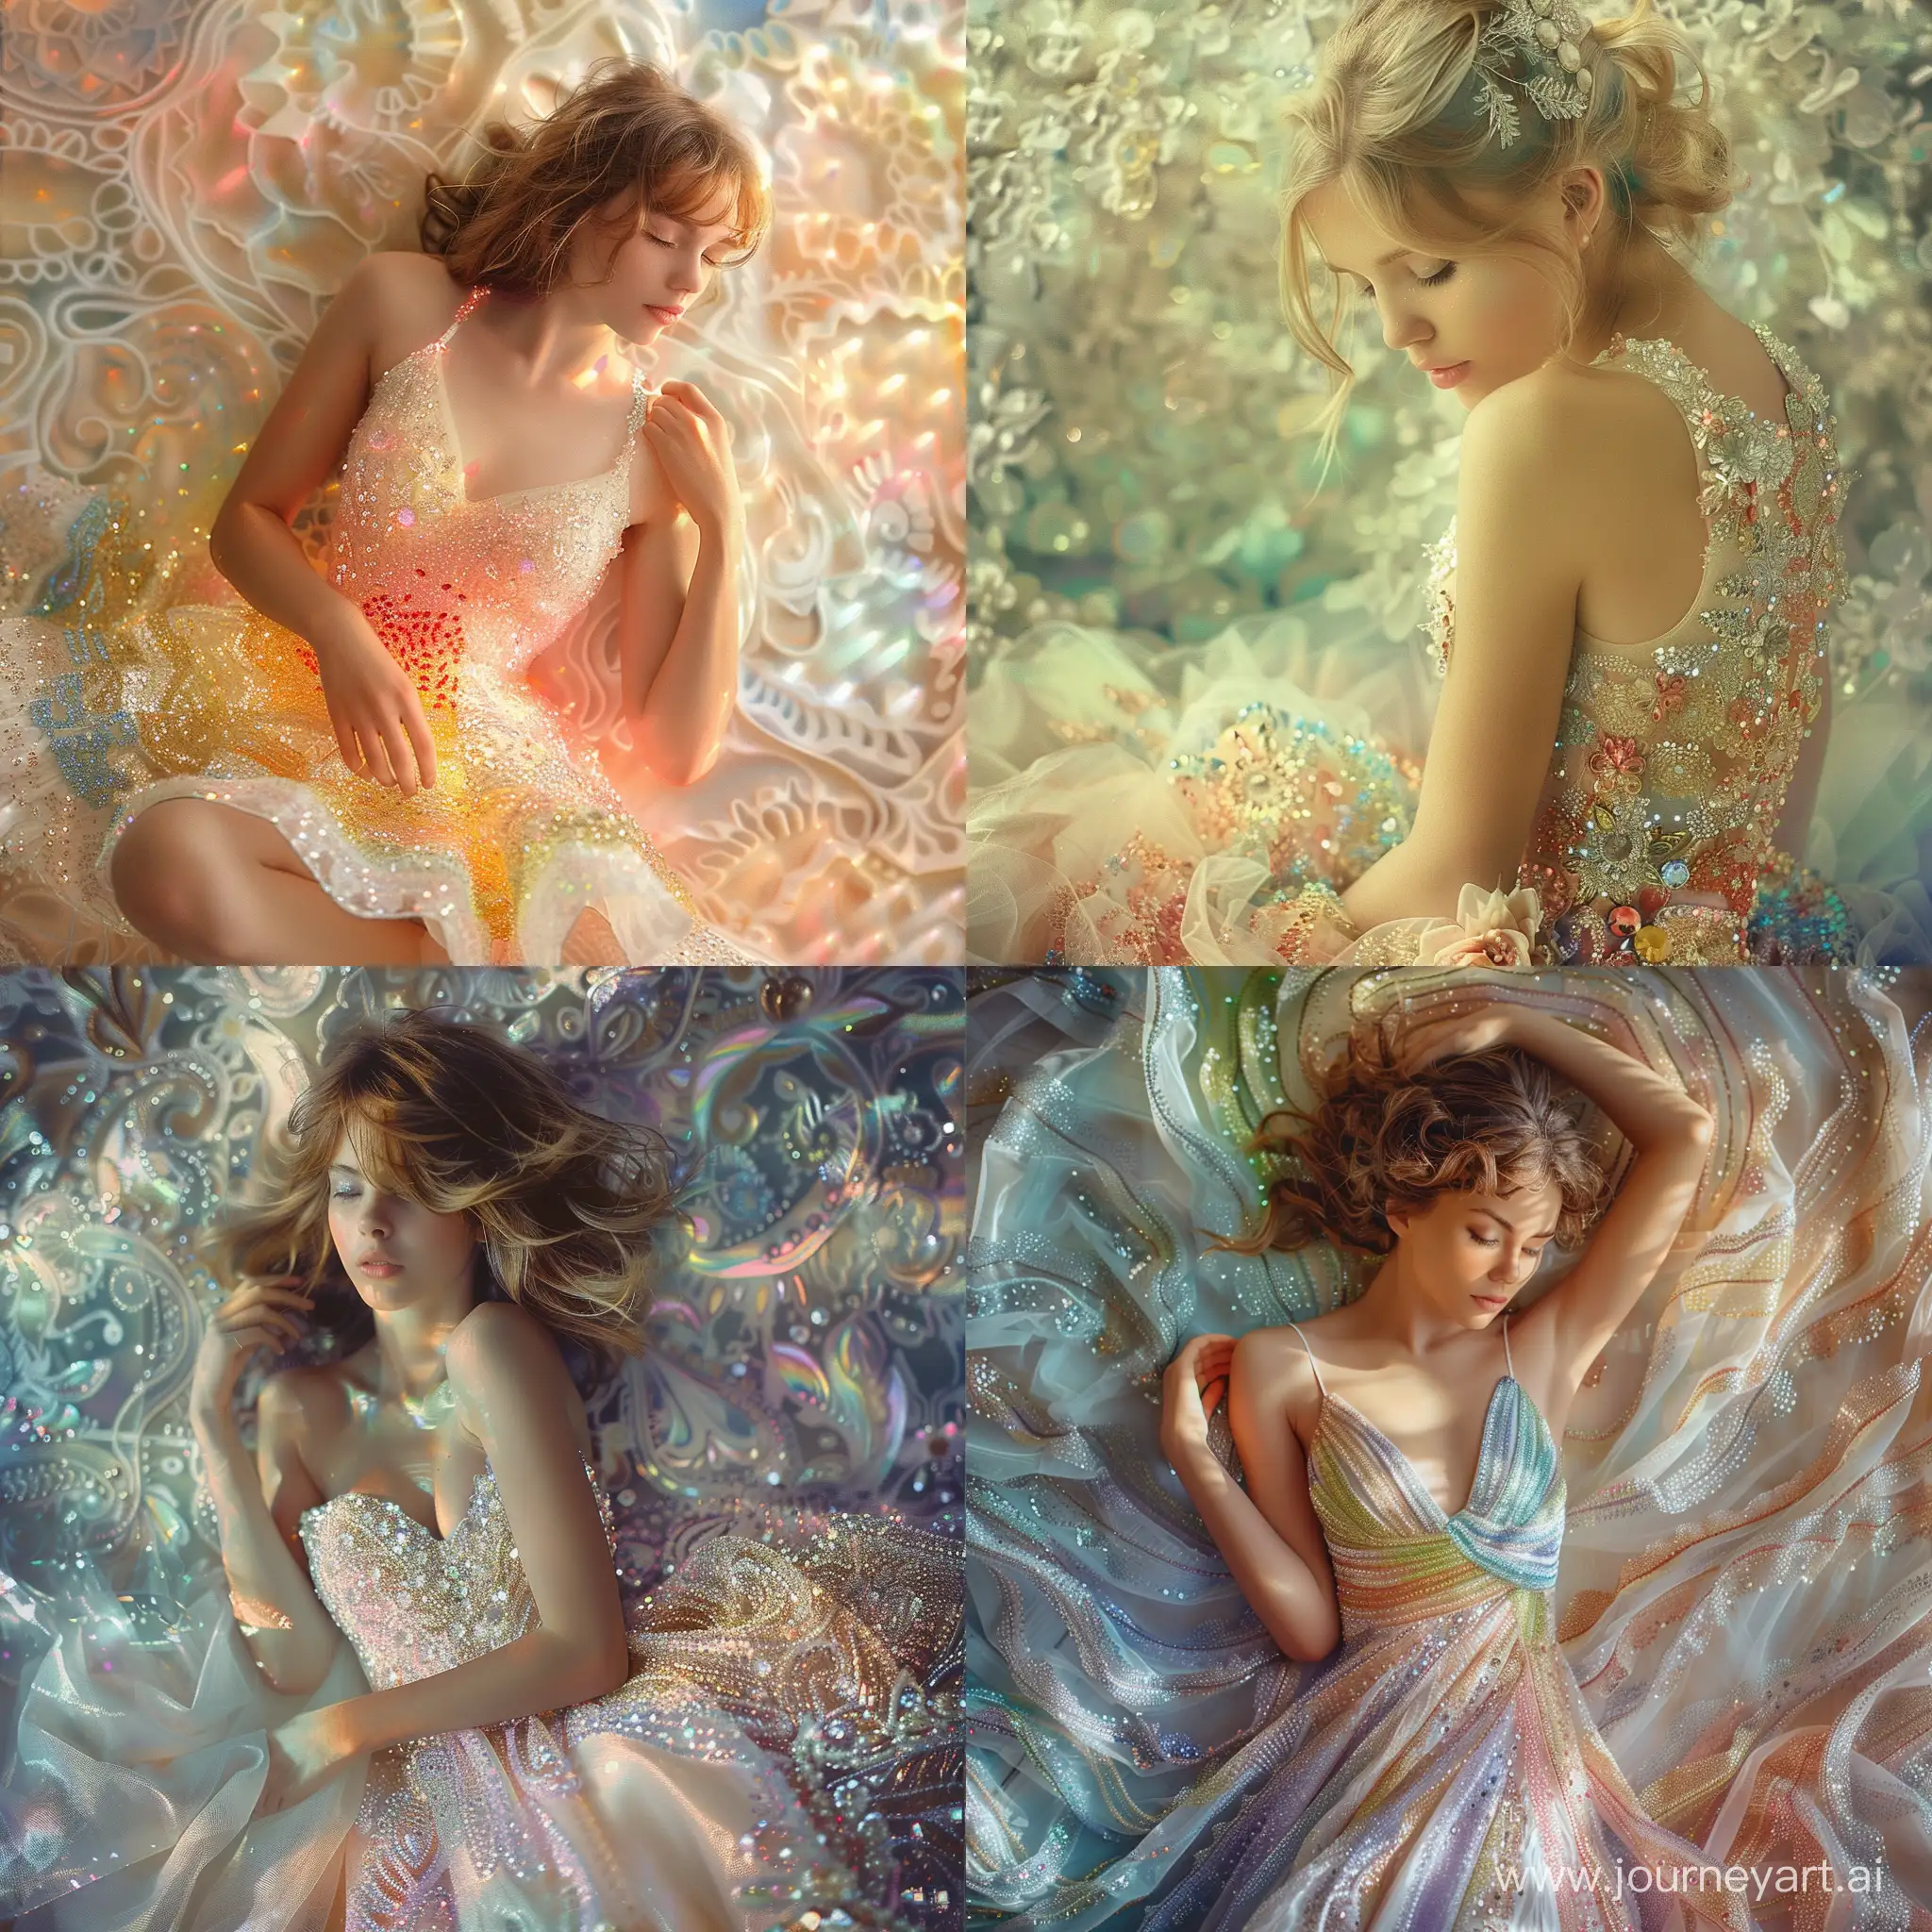 Surreal-Portrait-of-a-Swarovski-Crystal-Summer-Dress-Adorning-a-Beautiful-Girl